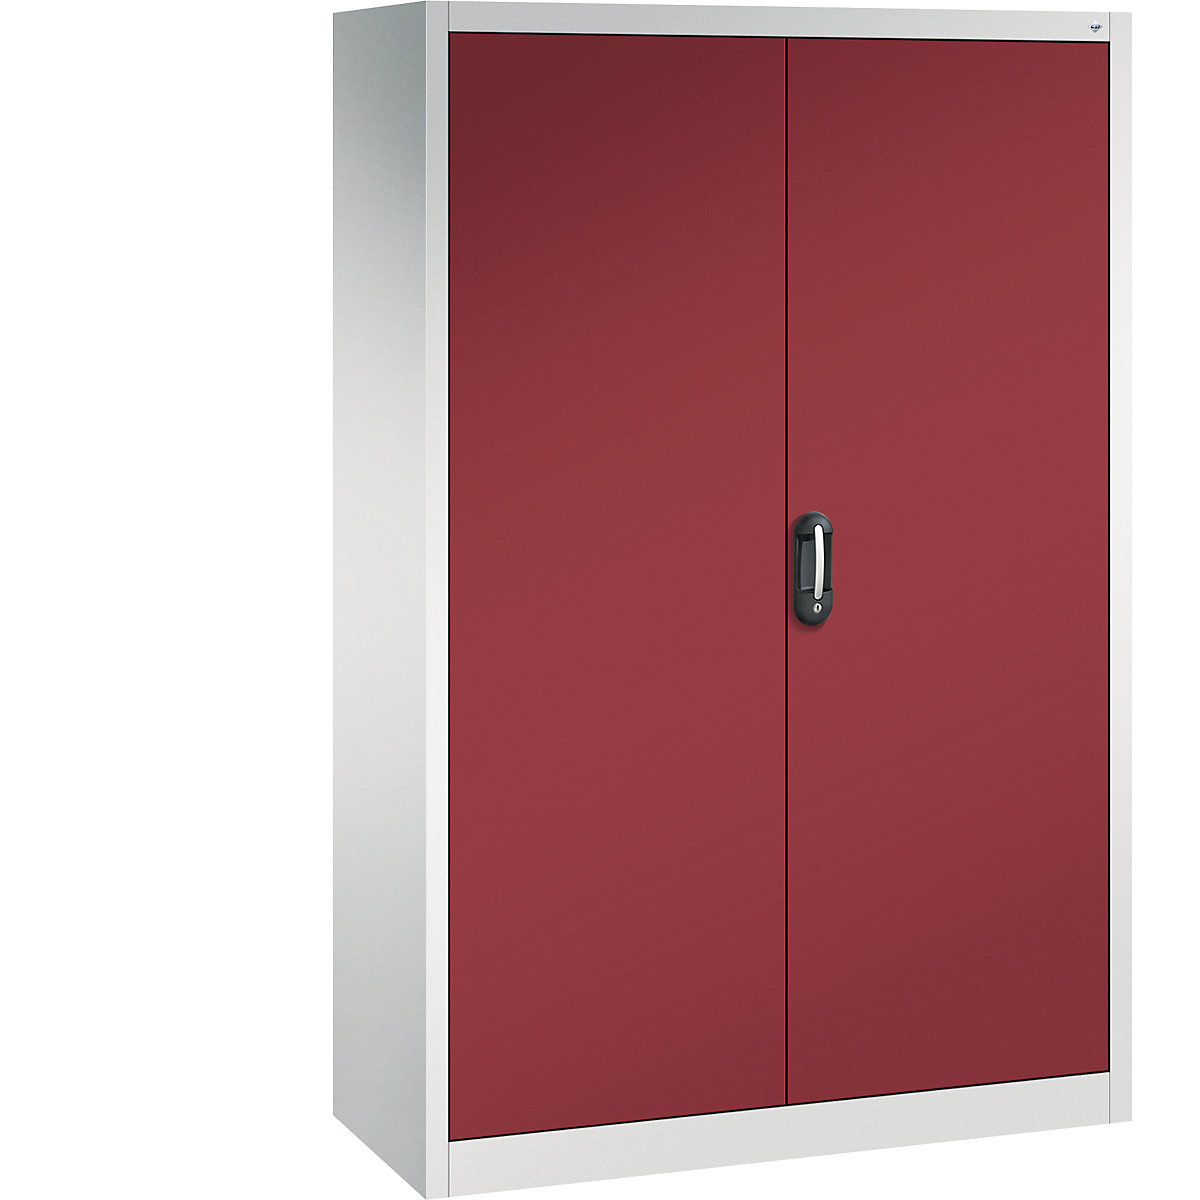 ACURADO universal cupboard – C+P, WxD 1200 x 500 mm, light grey / ruby red-24